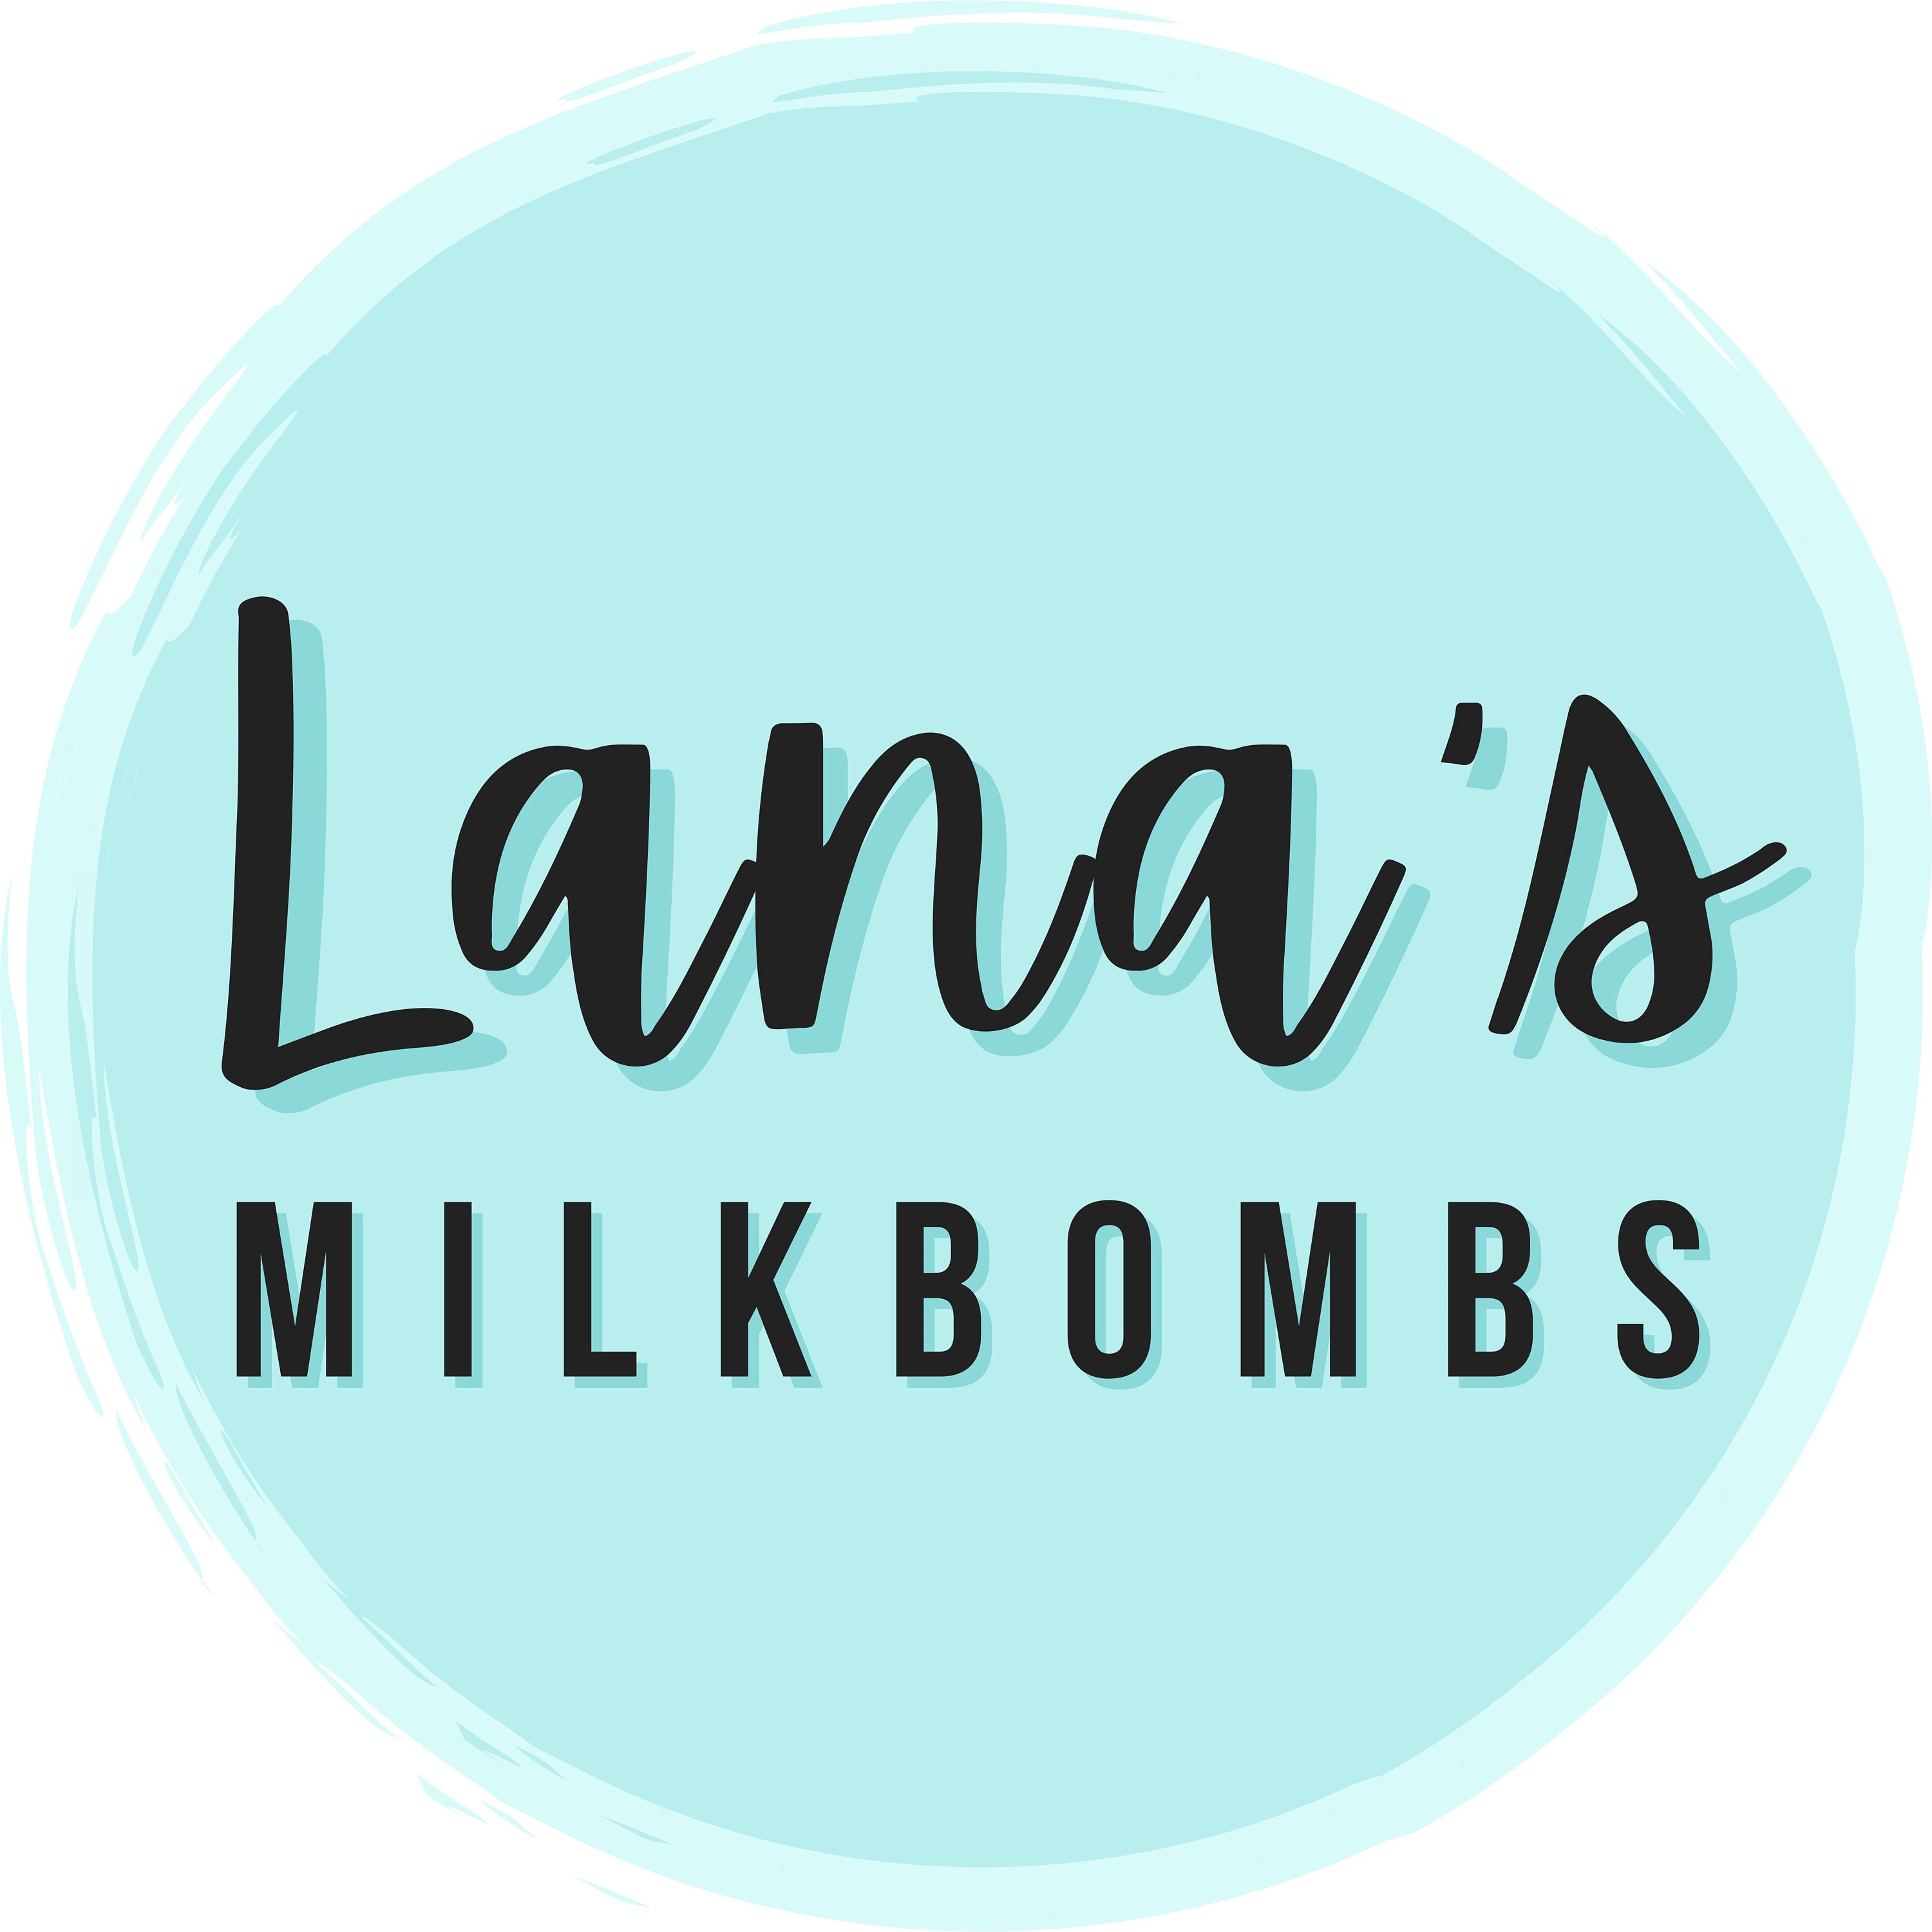 elite hot cocoa bomb supplies tips by LanasMilkbombs on Etsy